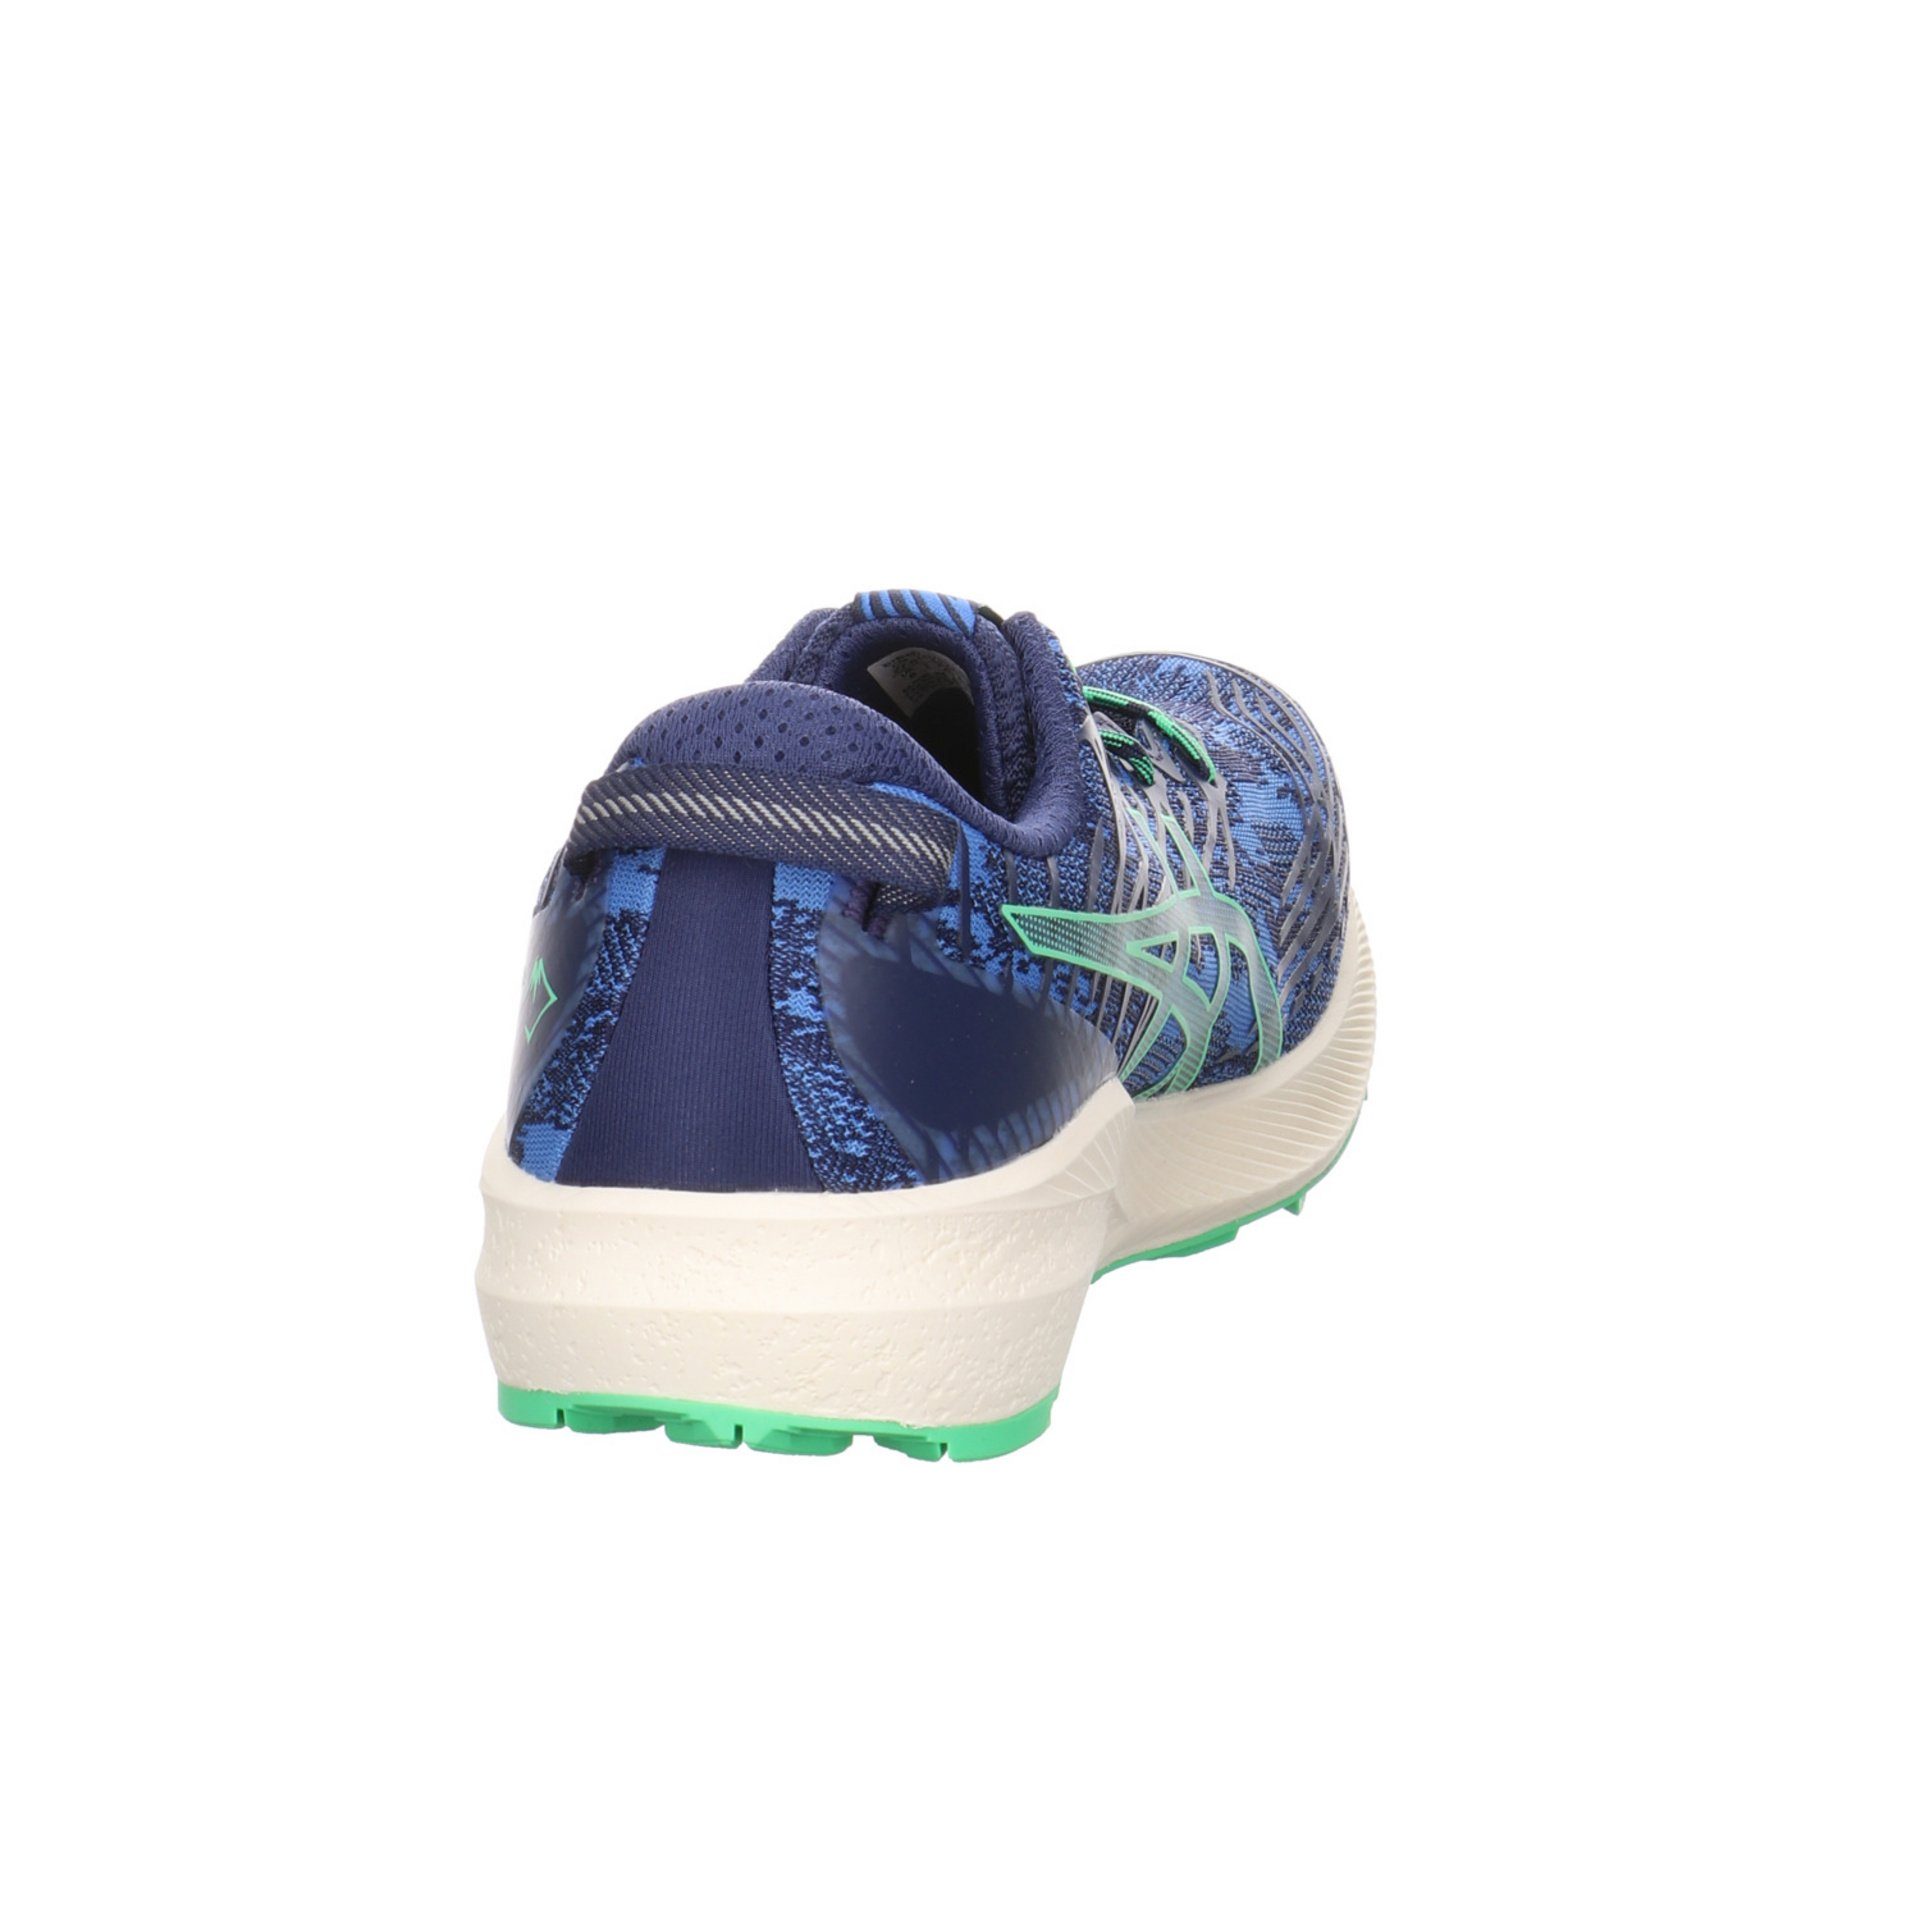 Textil Asics 3 gemustert Fuji Sneaker Trailrunningschuh Textil Lite